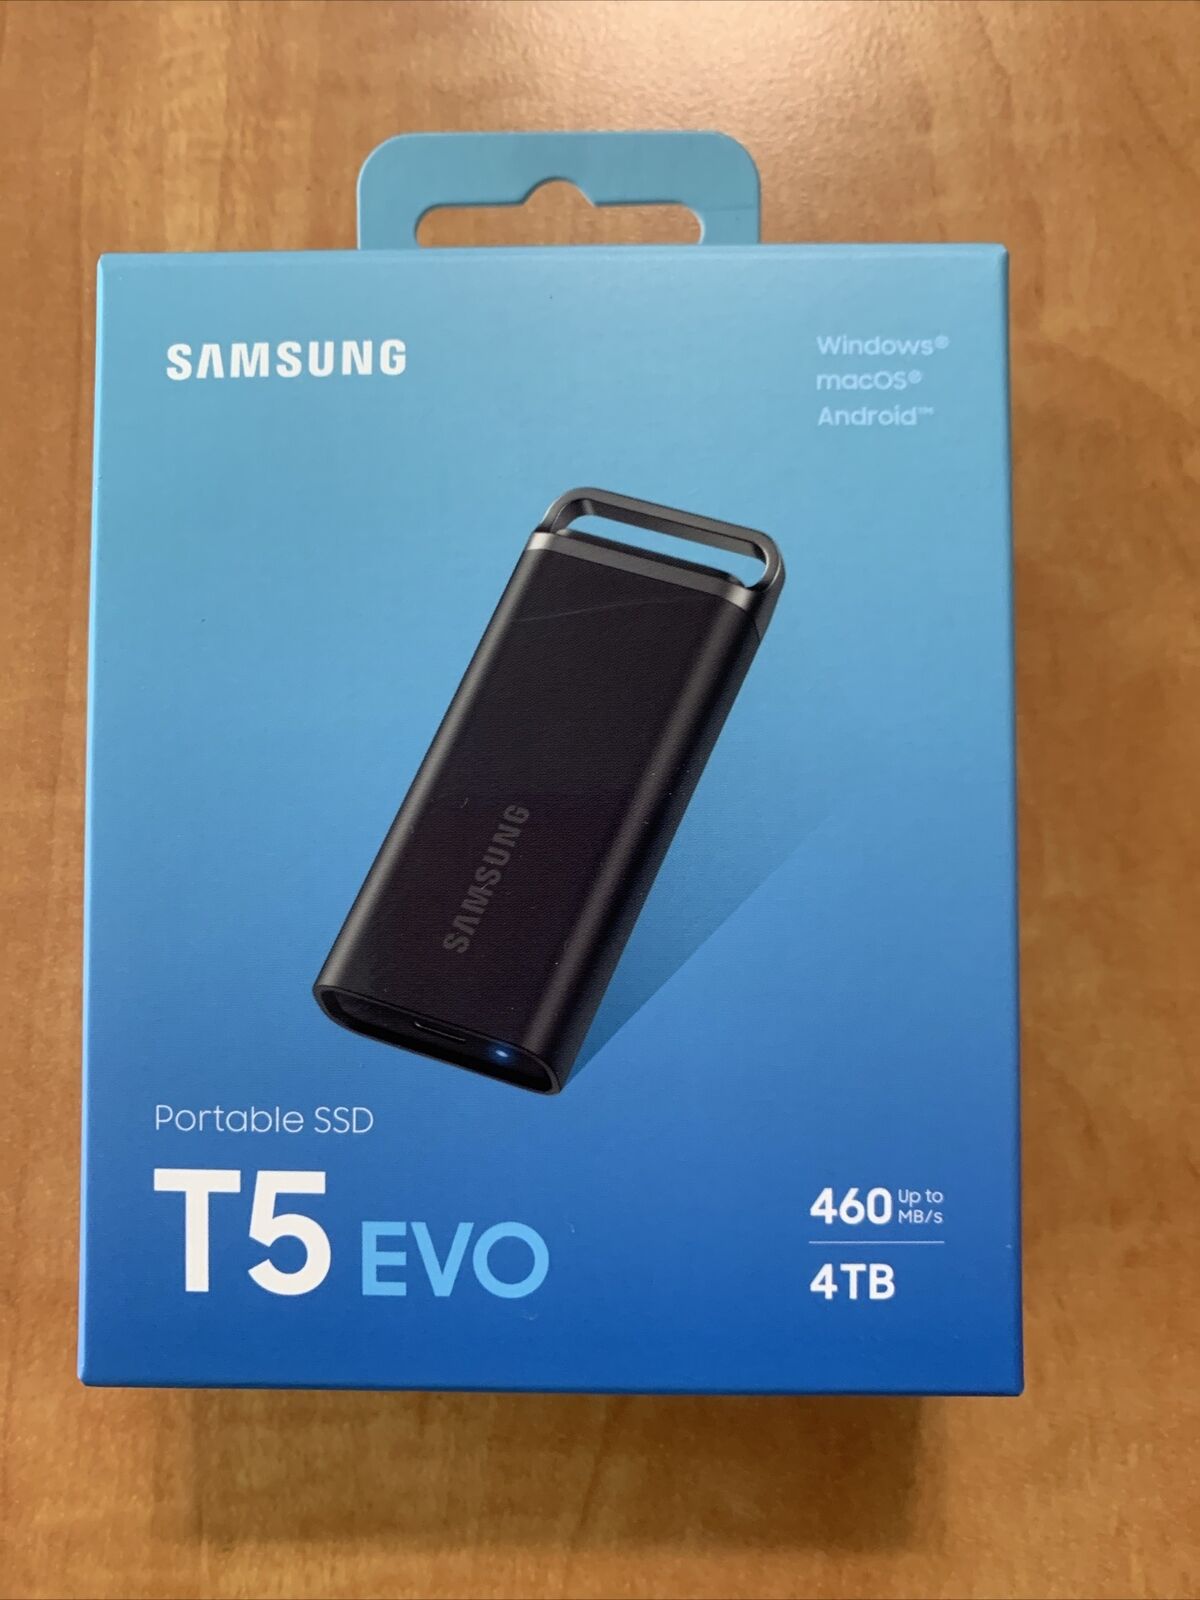 SAMSUNG T5 EVO Portable SSD 4TB Black, Up-to 460MB/s, USB 3.2 Gen 1 New